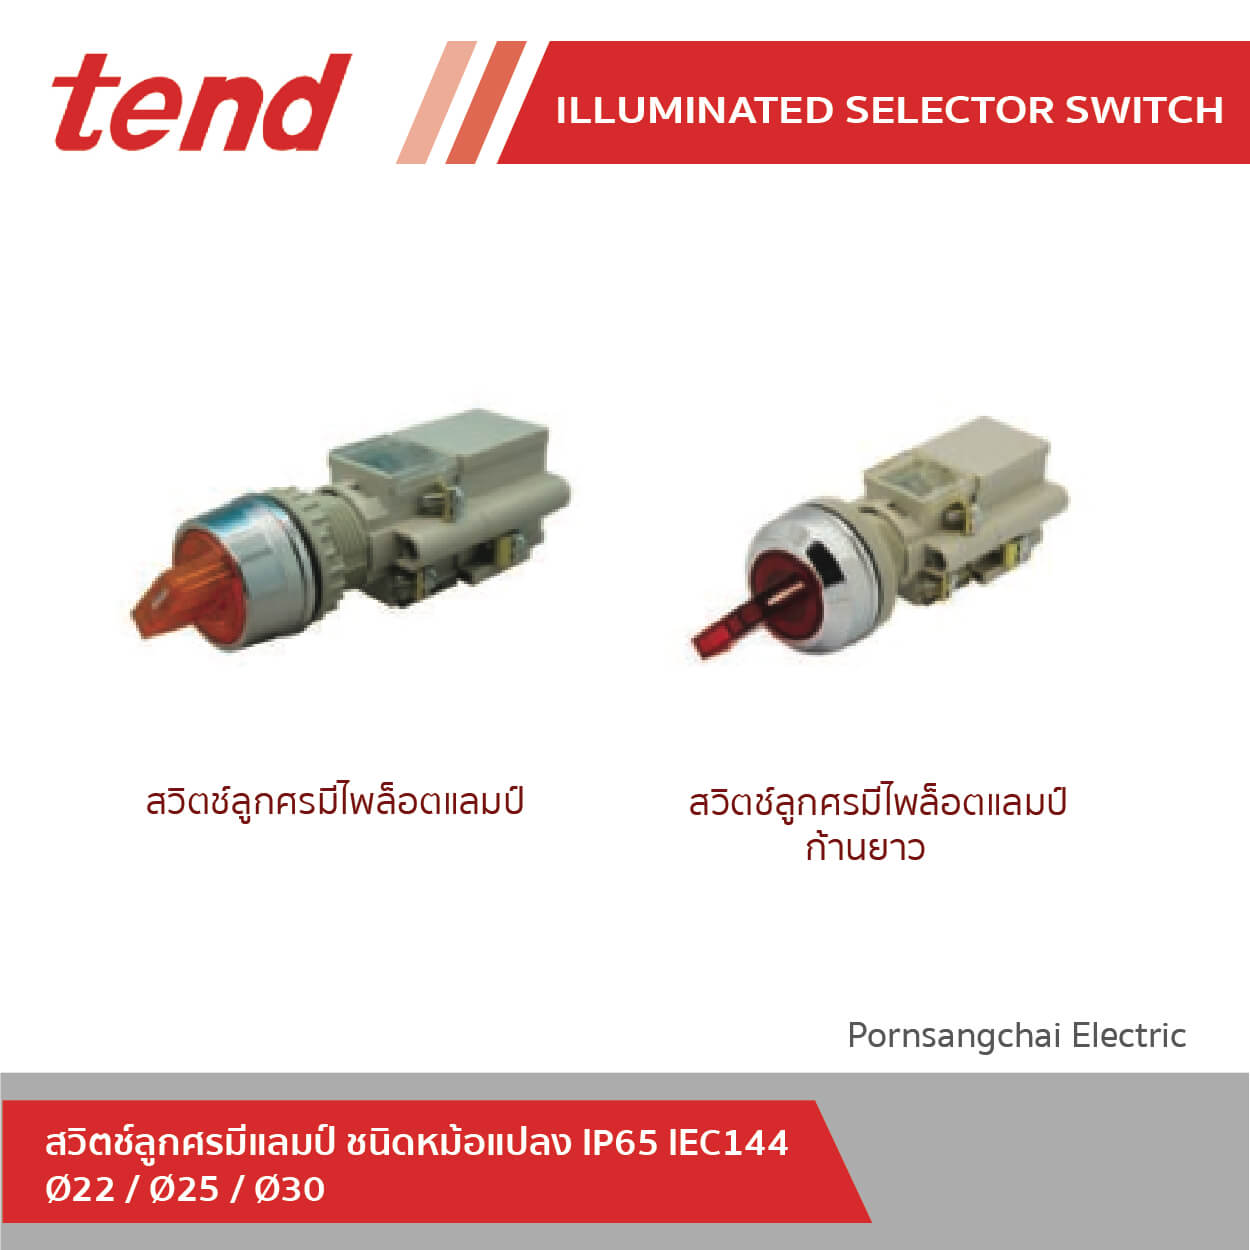 tend สวิตช์ลูกศรมีแลมป์ ชนิดหม้อแปลง IP65 IEC144 - Illuminated Selector Switch